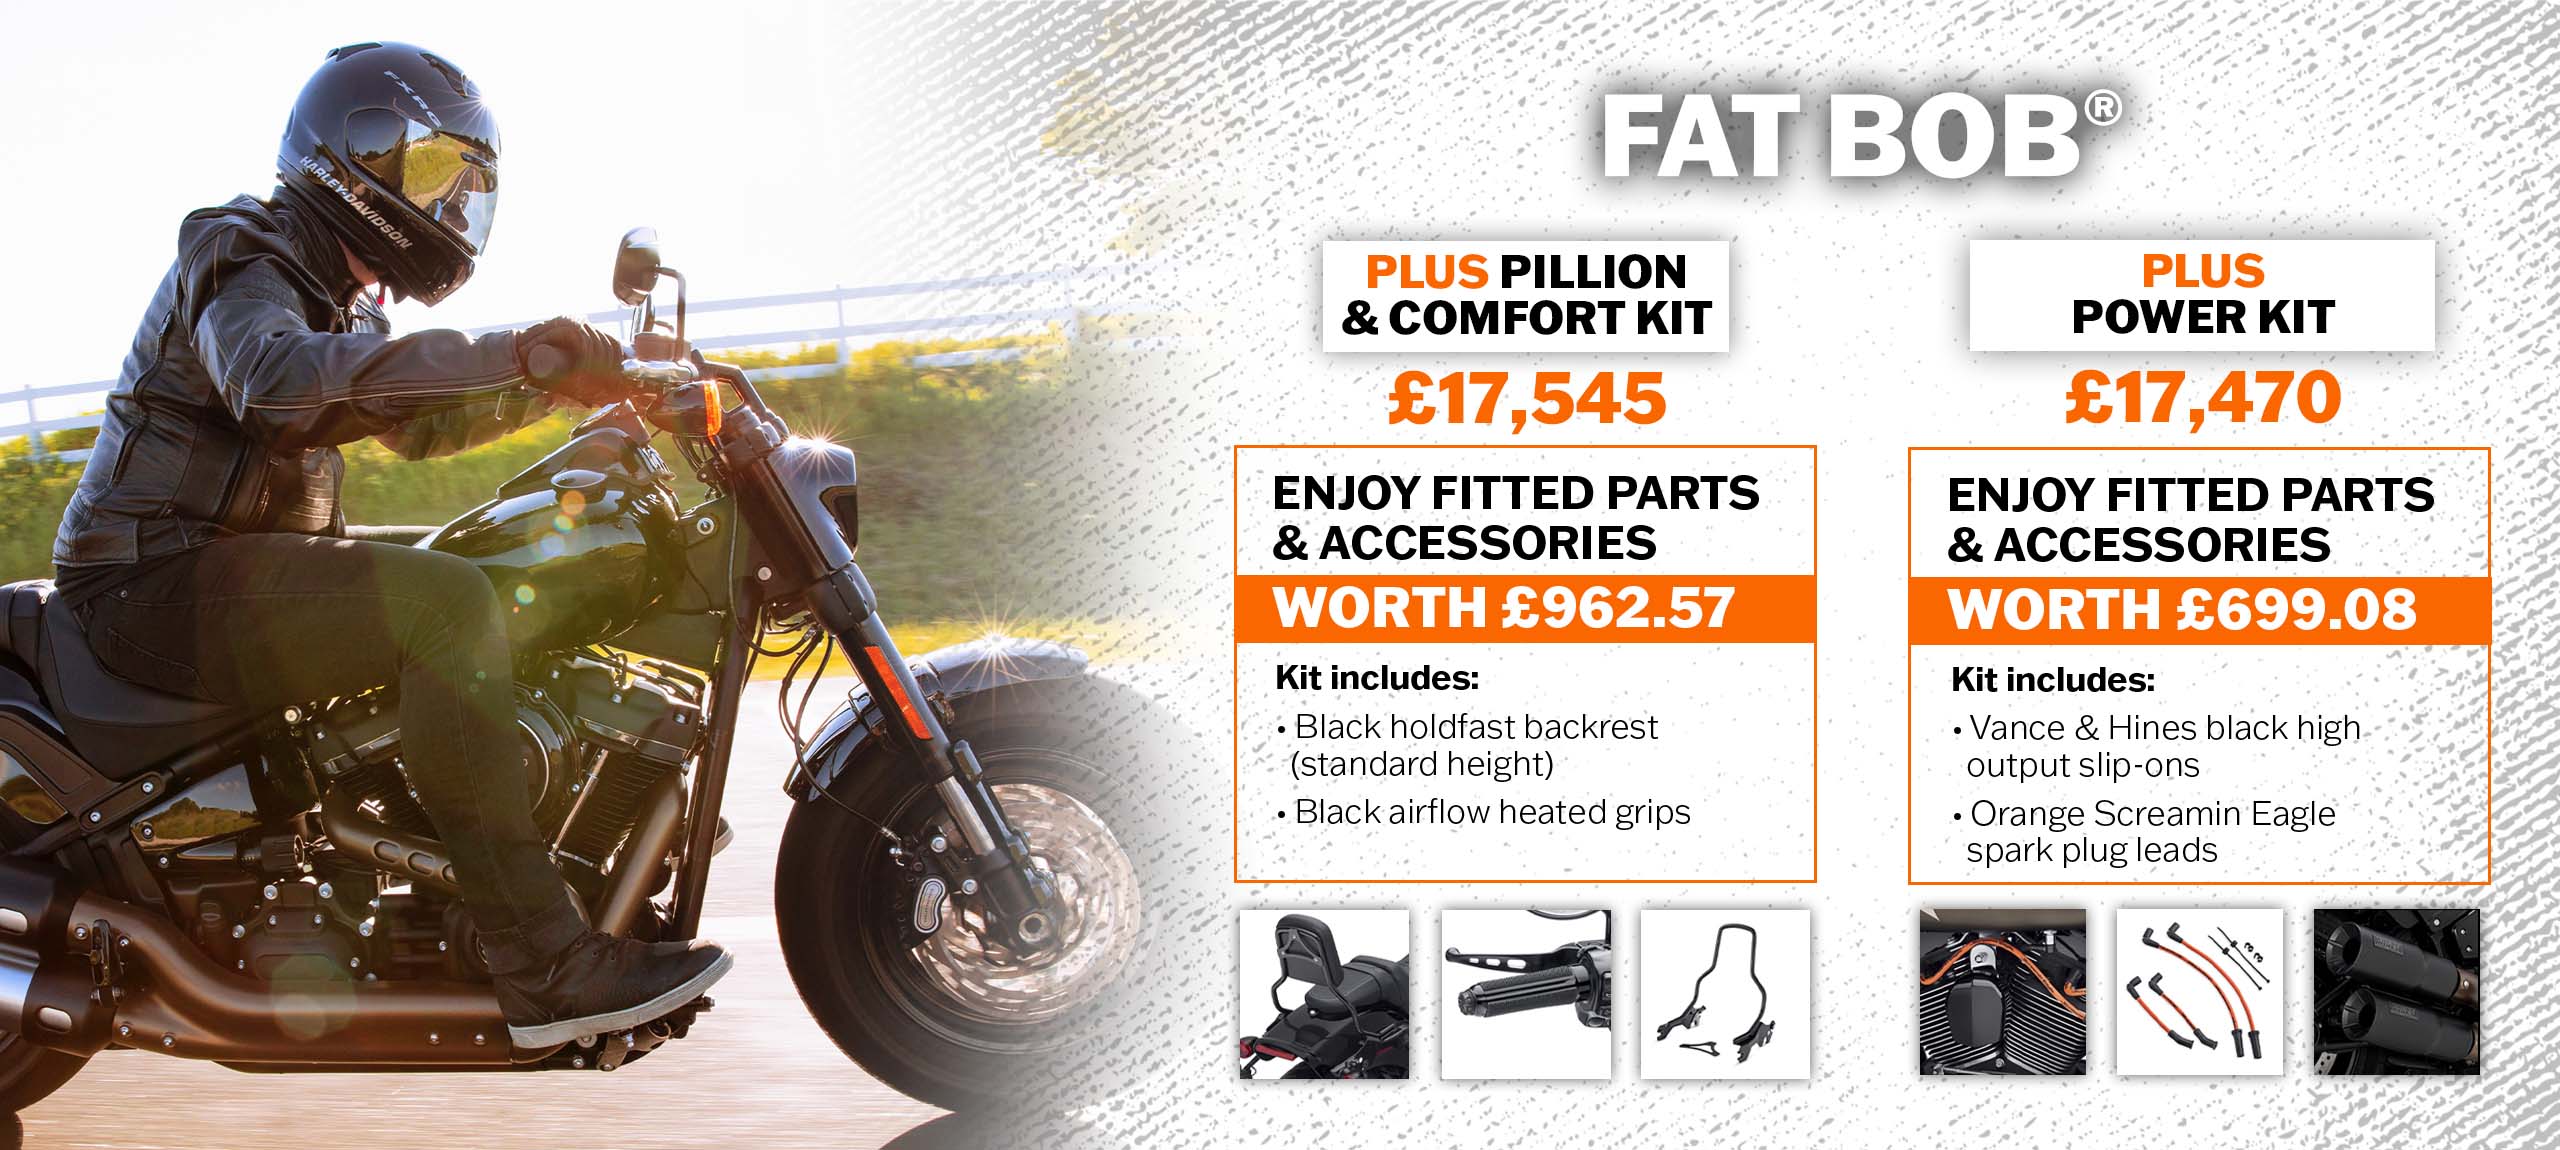 Harley-Davidson Fat Bob Motorcycle Offer